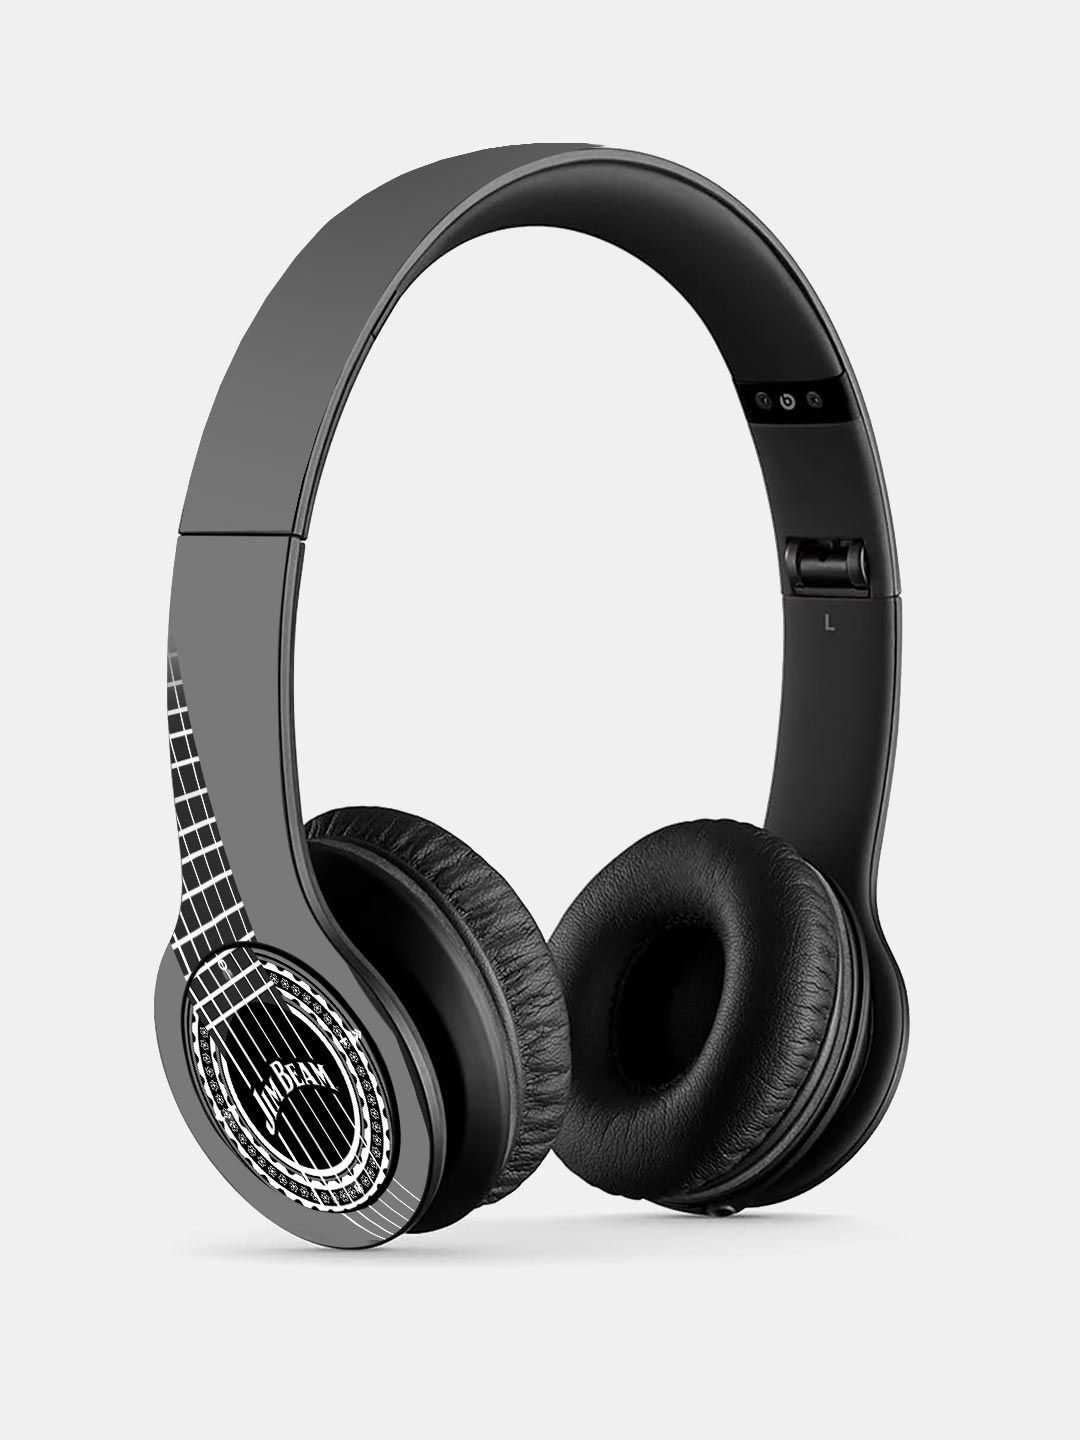 Buy Jim Beam Flamenco - P47 Wireless On Ear Headphones Headphones Online